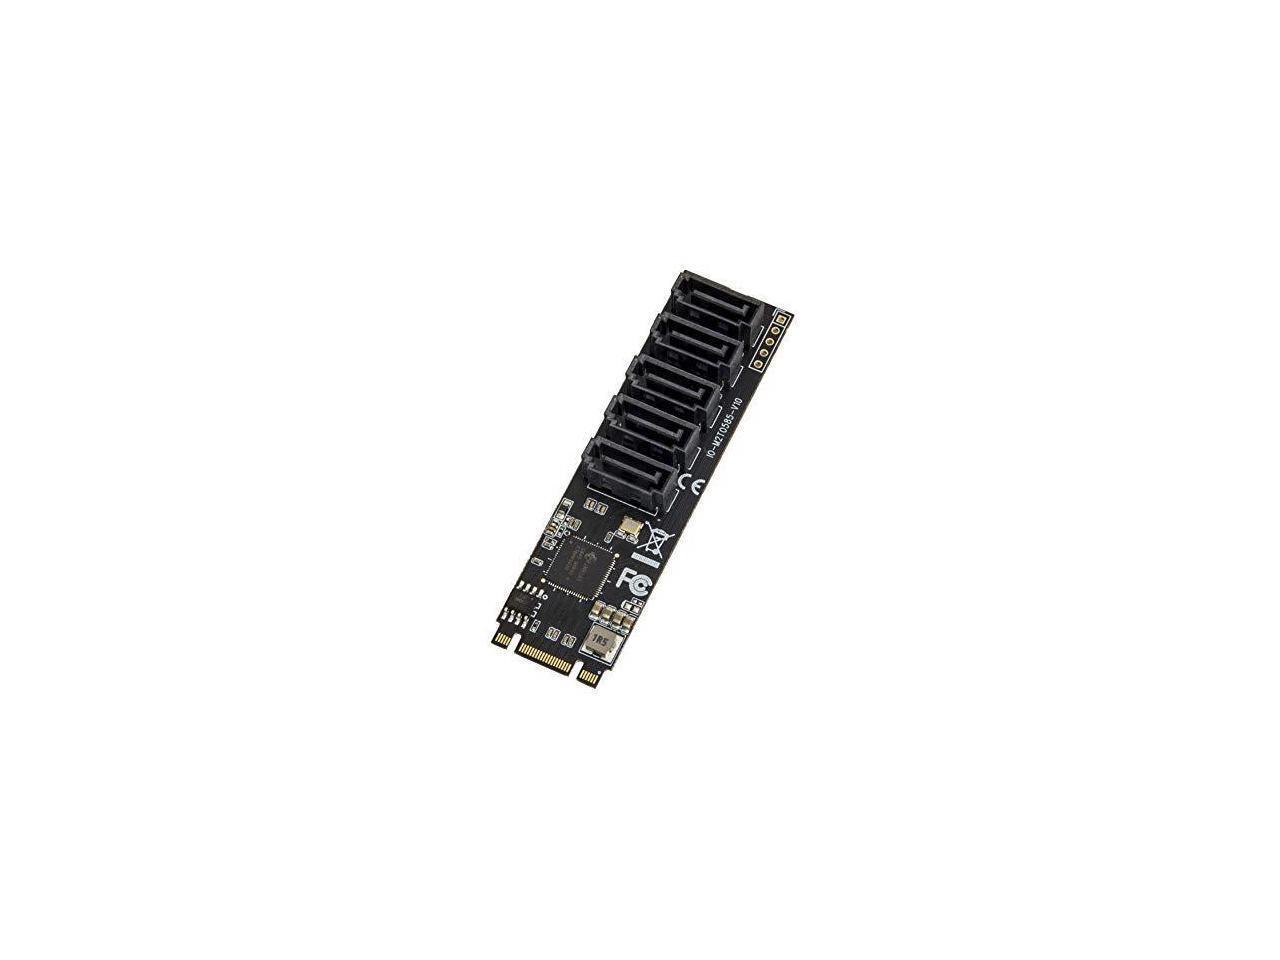 Syba 5 port Non-RAID SATA III 6Gbp/s to M.2 B+M Key Adapter PCI-e 3.0 x2